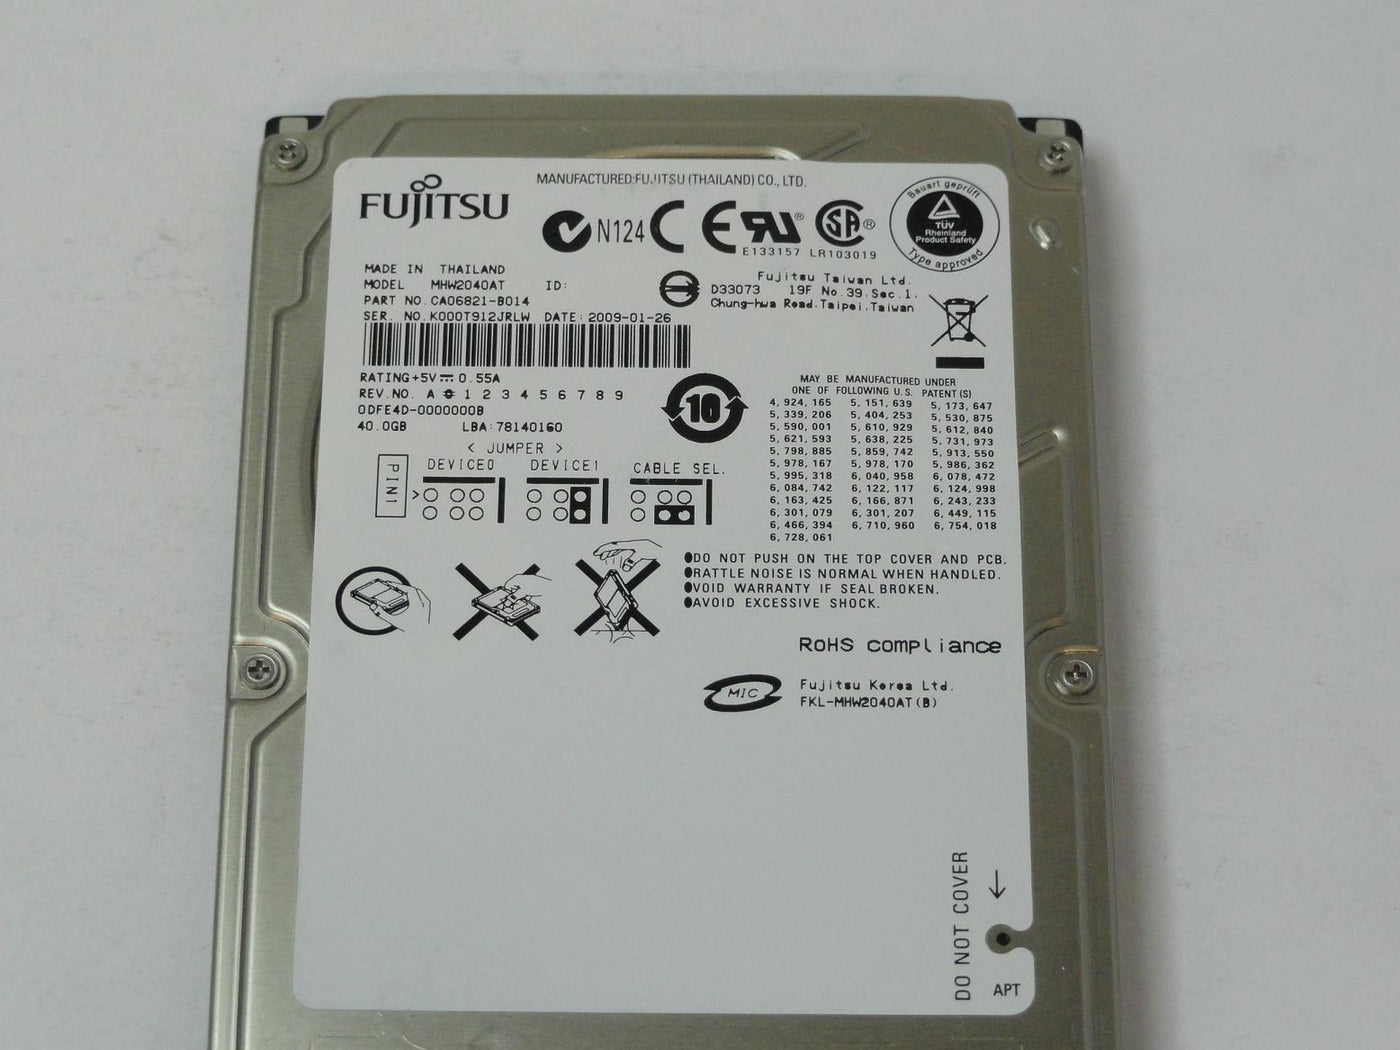 PR03323_CA06821-B014_Fujitsu 40GB IDE 4200rpm 2.5in HDD - Image3